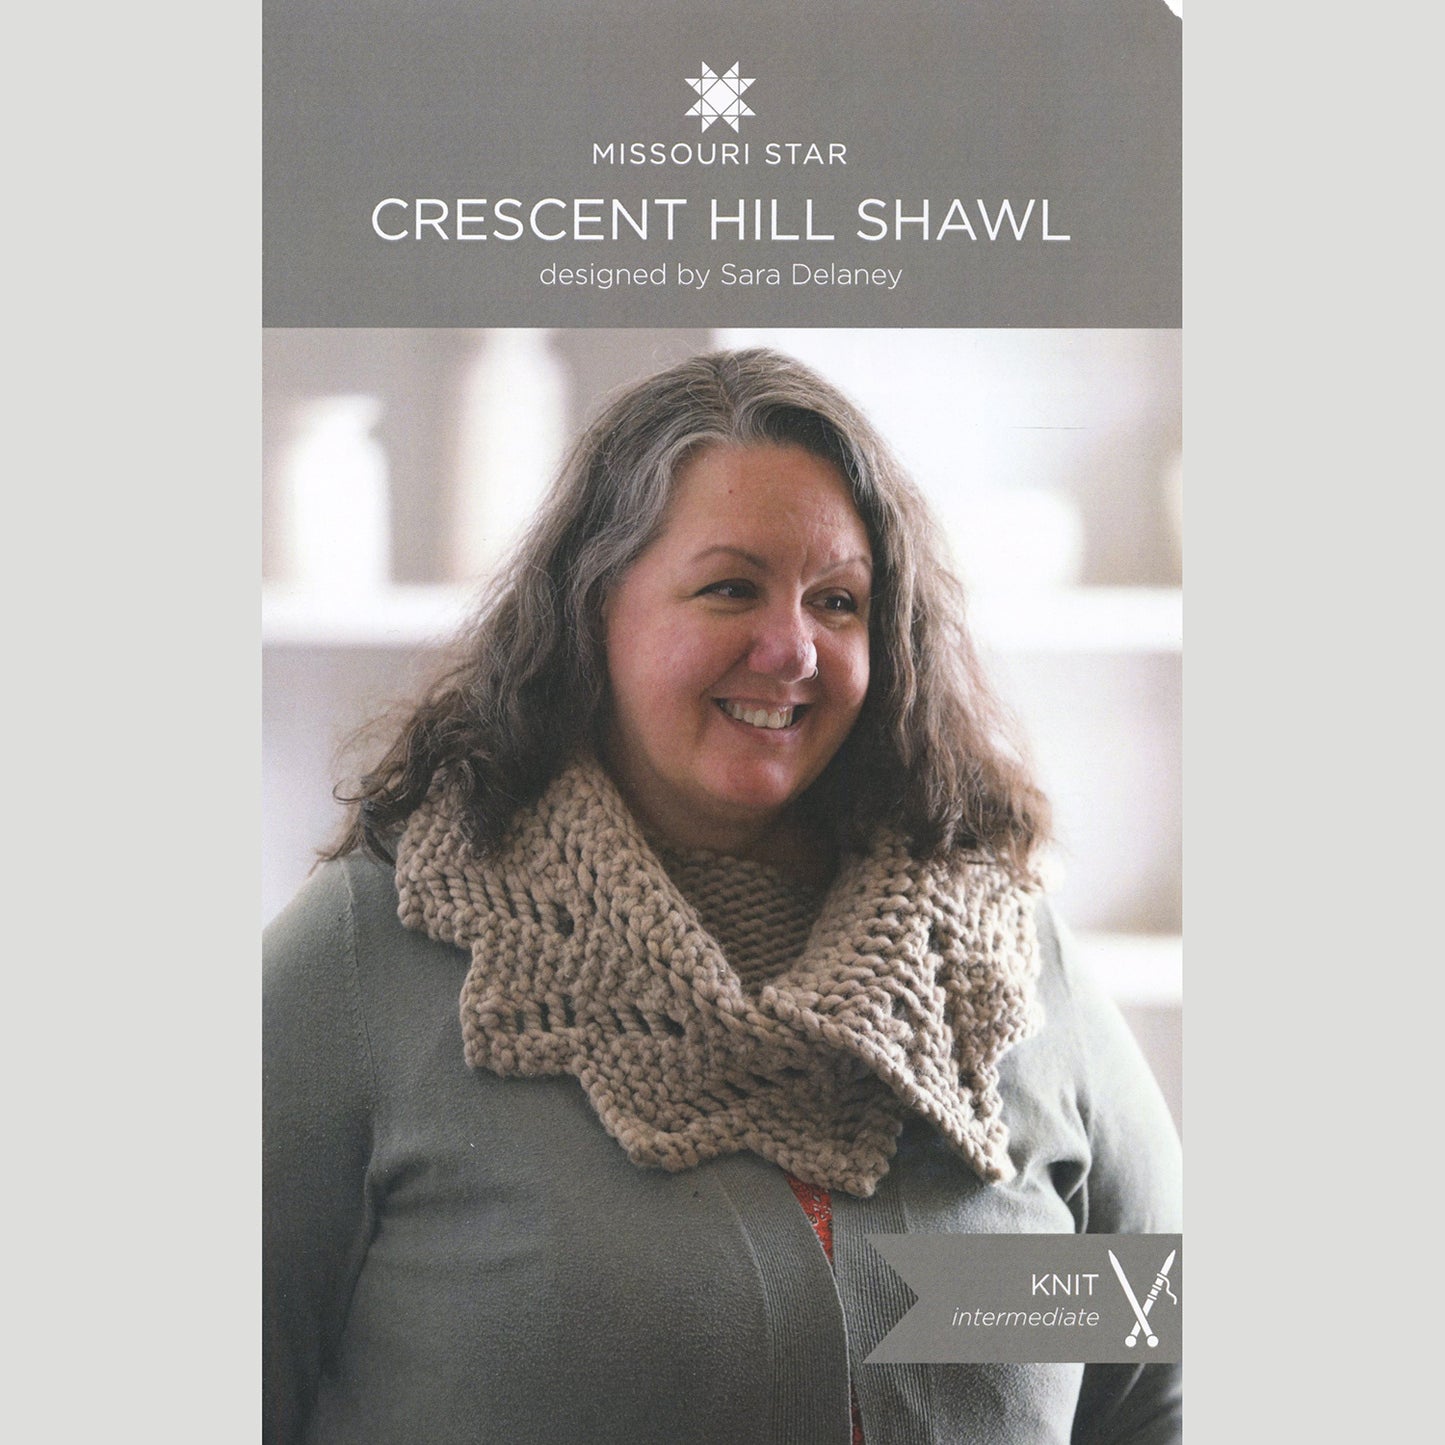 Crescent Hill Shawl Knit Kit - Doeskin Heather Alternative View #2